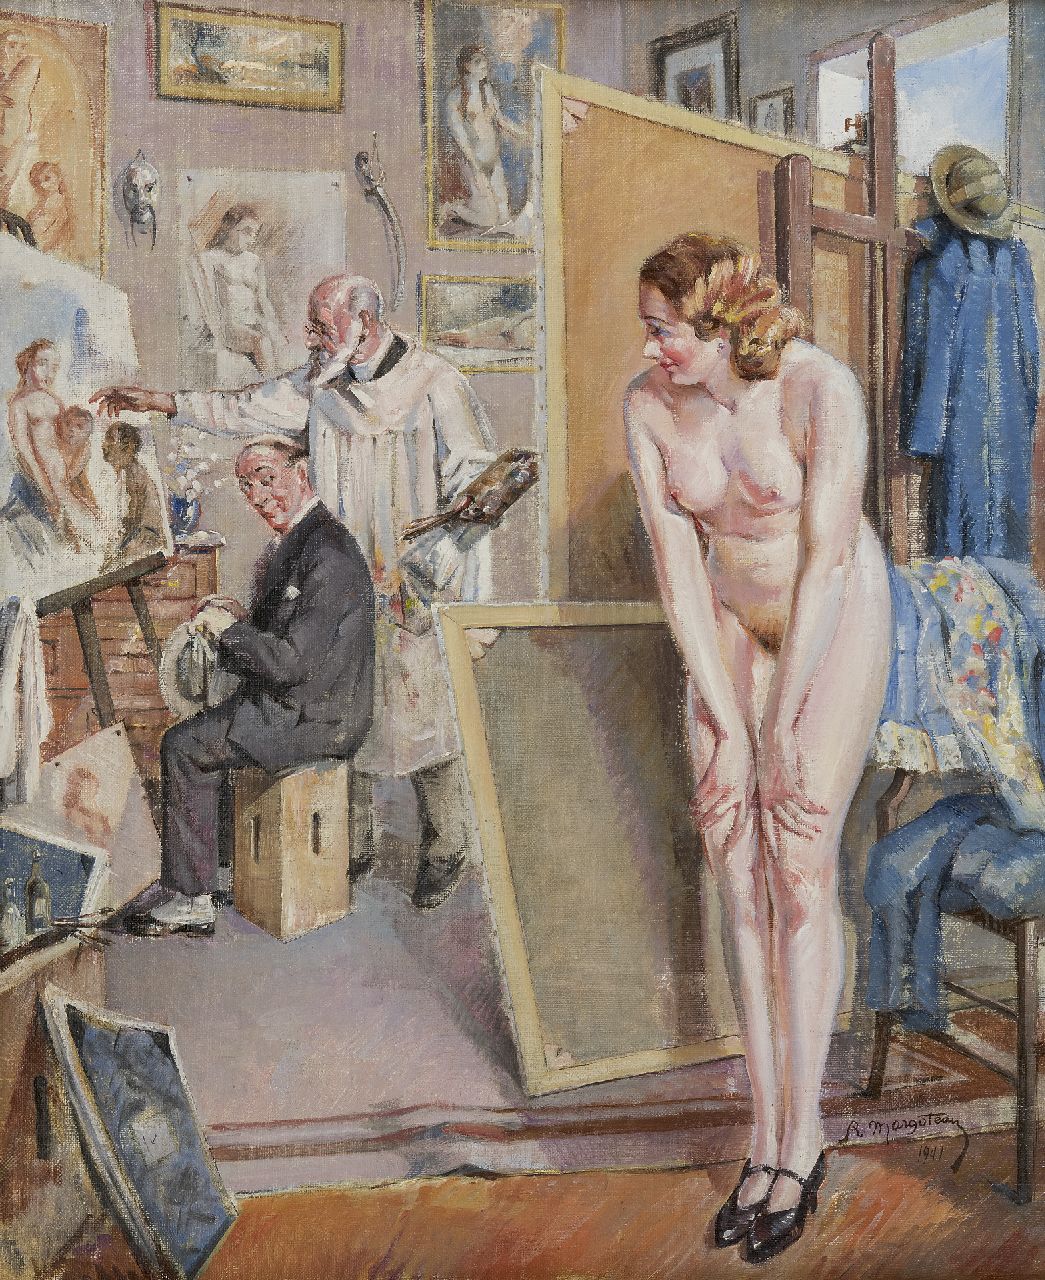 Margoteau R.P.  | René Pierre Margoteau, Het favoriete model, olieverf op doek 60,2 x 50,1 cm, gesigneerd rechtsonder en gedateerd 1941